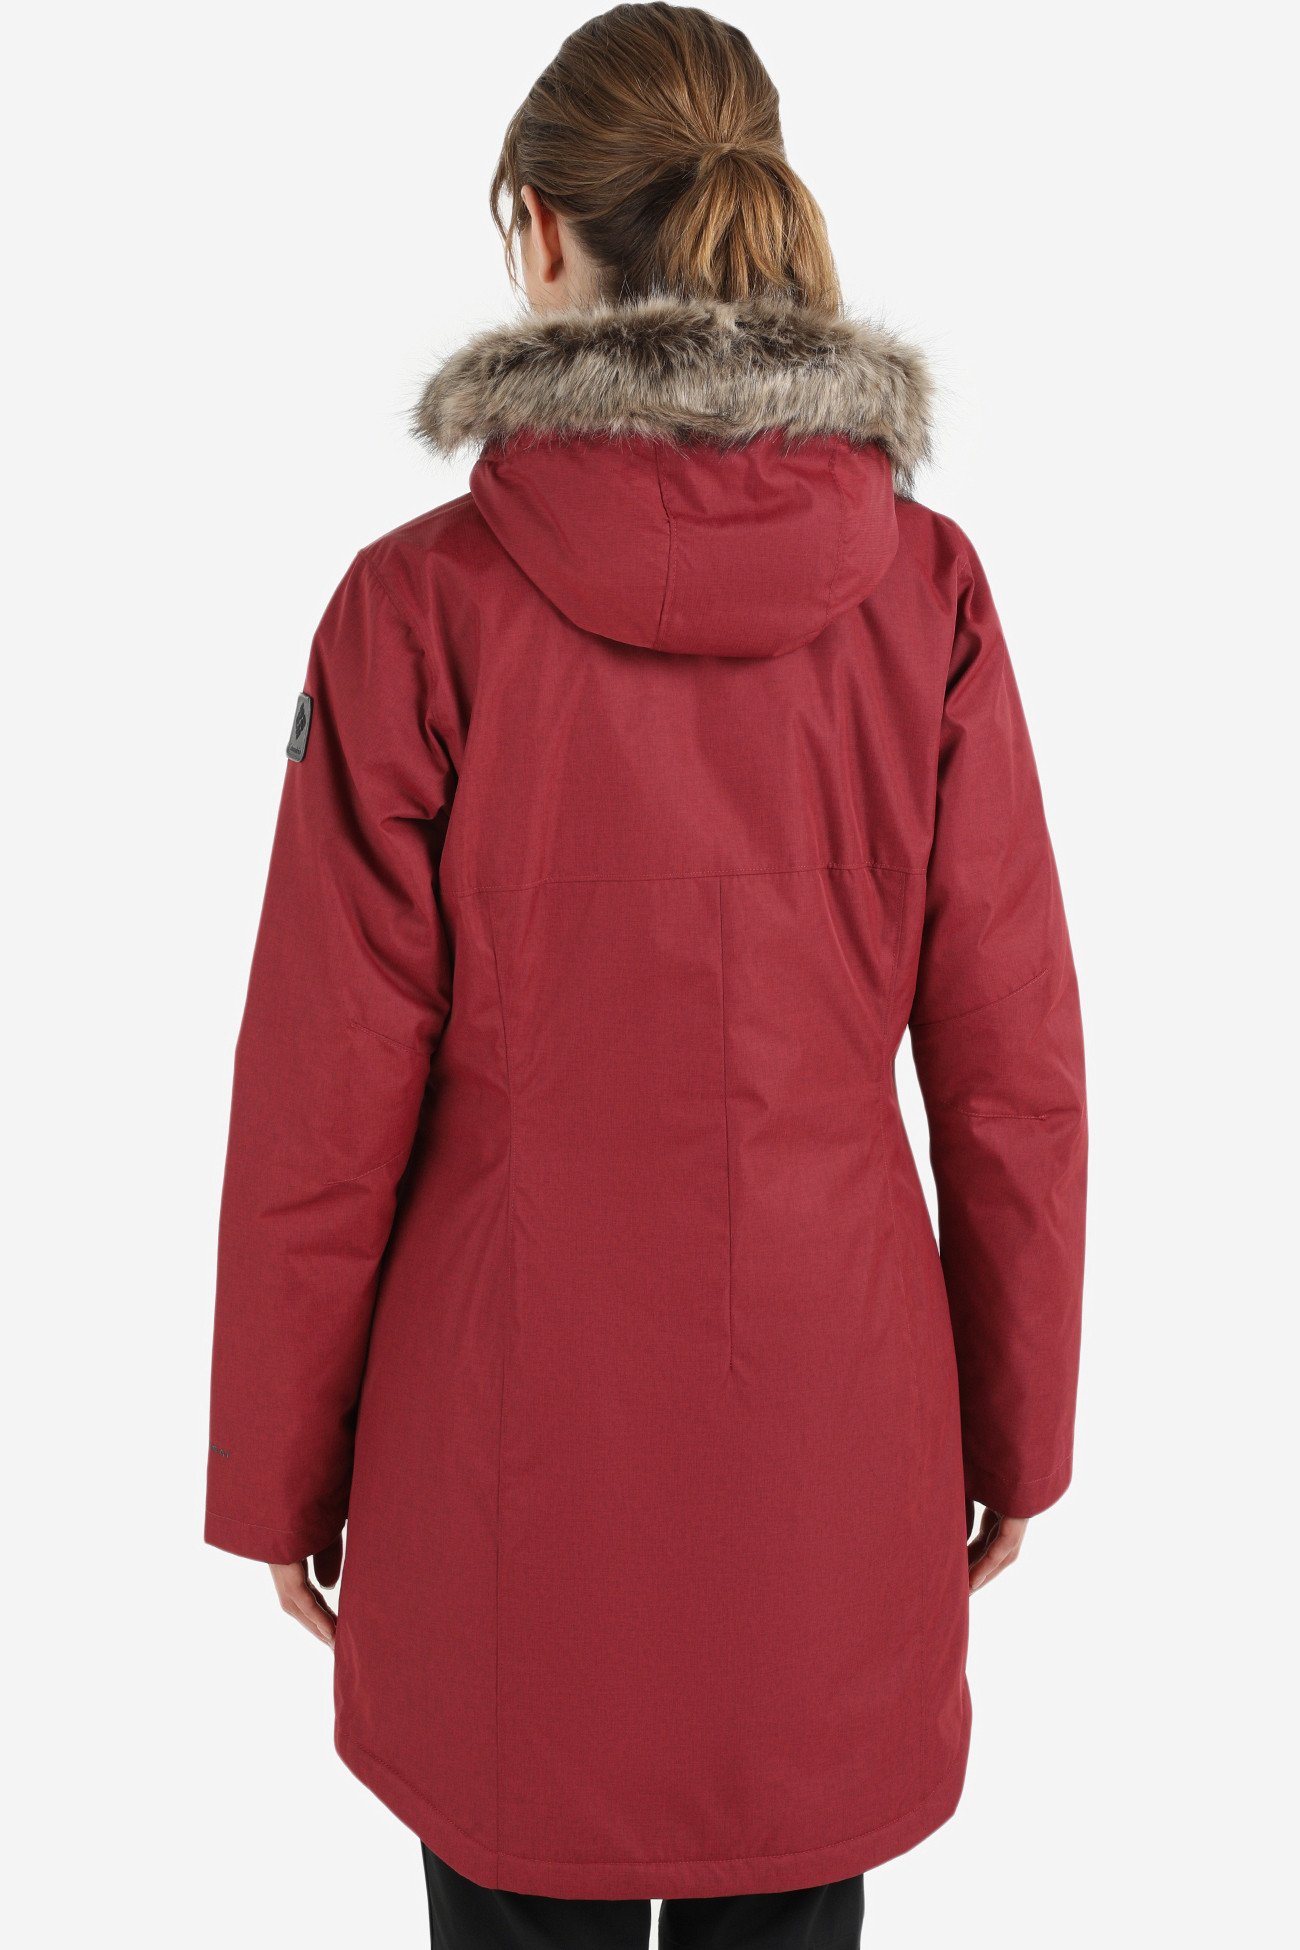 Куртка женская Columbia Suttle Mountain Long Insulated Jacket красная  1799751-619  изображение 2